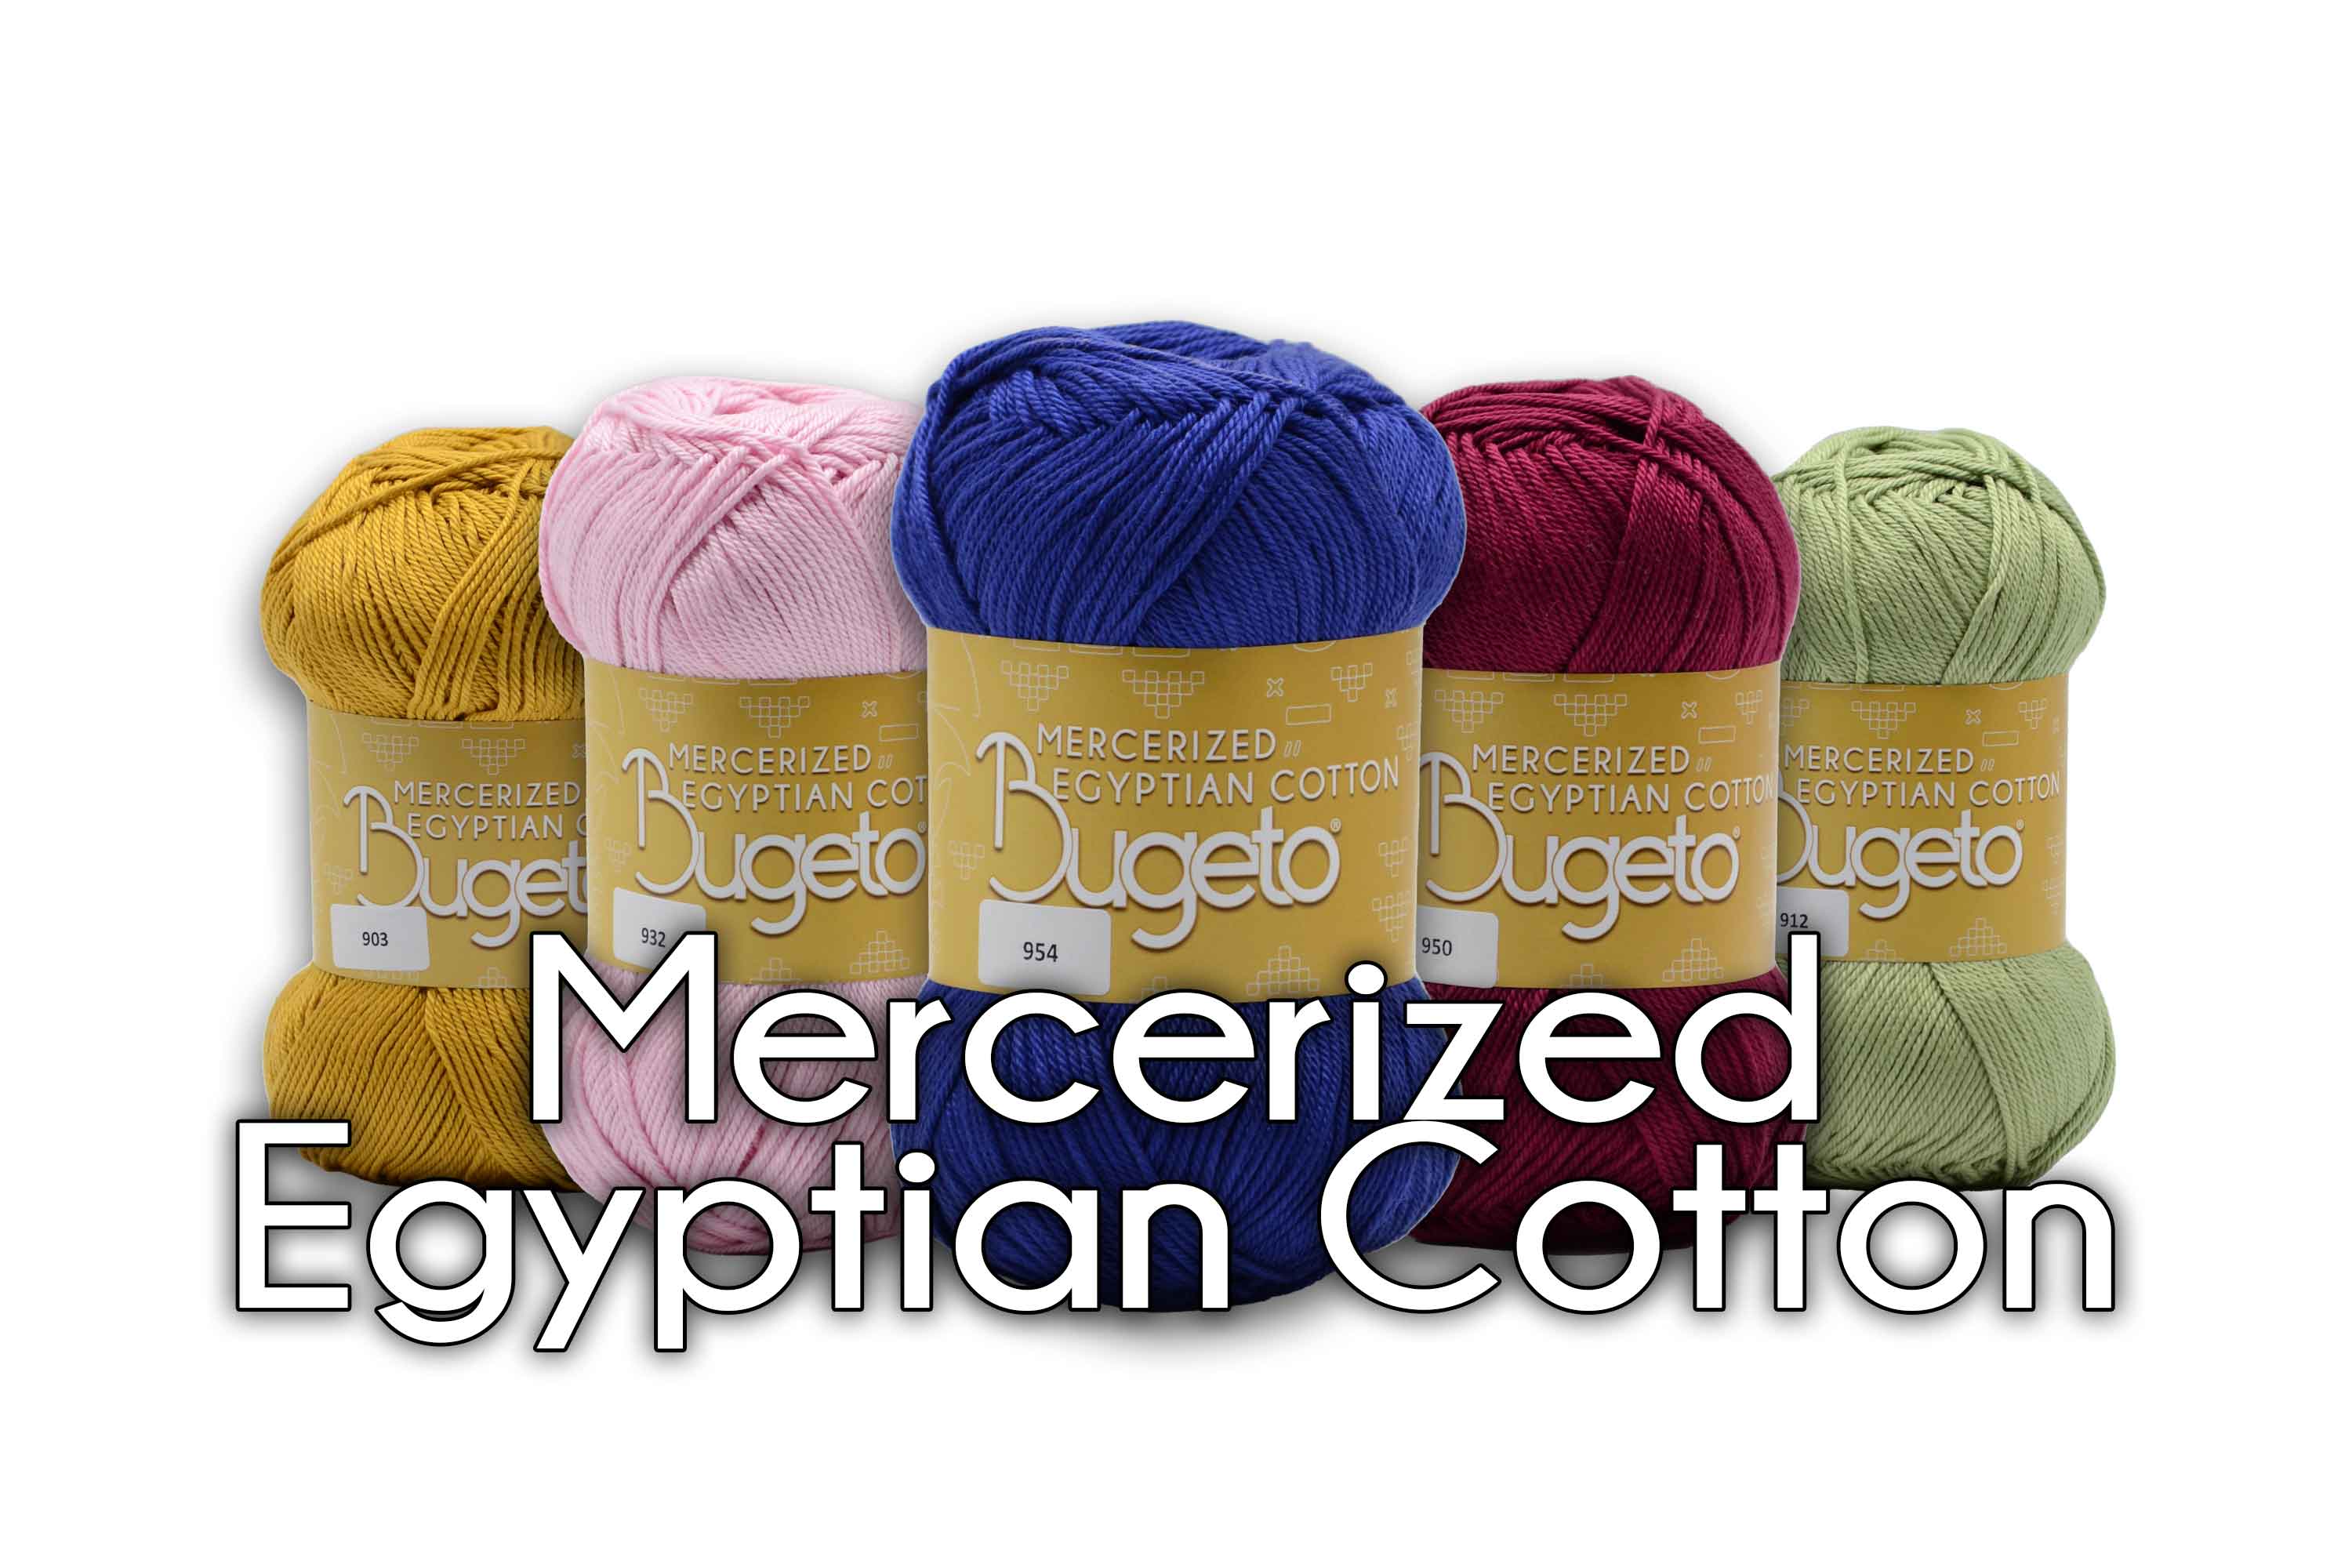 fancy yarn premium cotton yarn Bugeto yarn egyptian cotton yarn cotton yarn mercerized yarn mercerized egyptian cotton bugeto